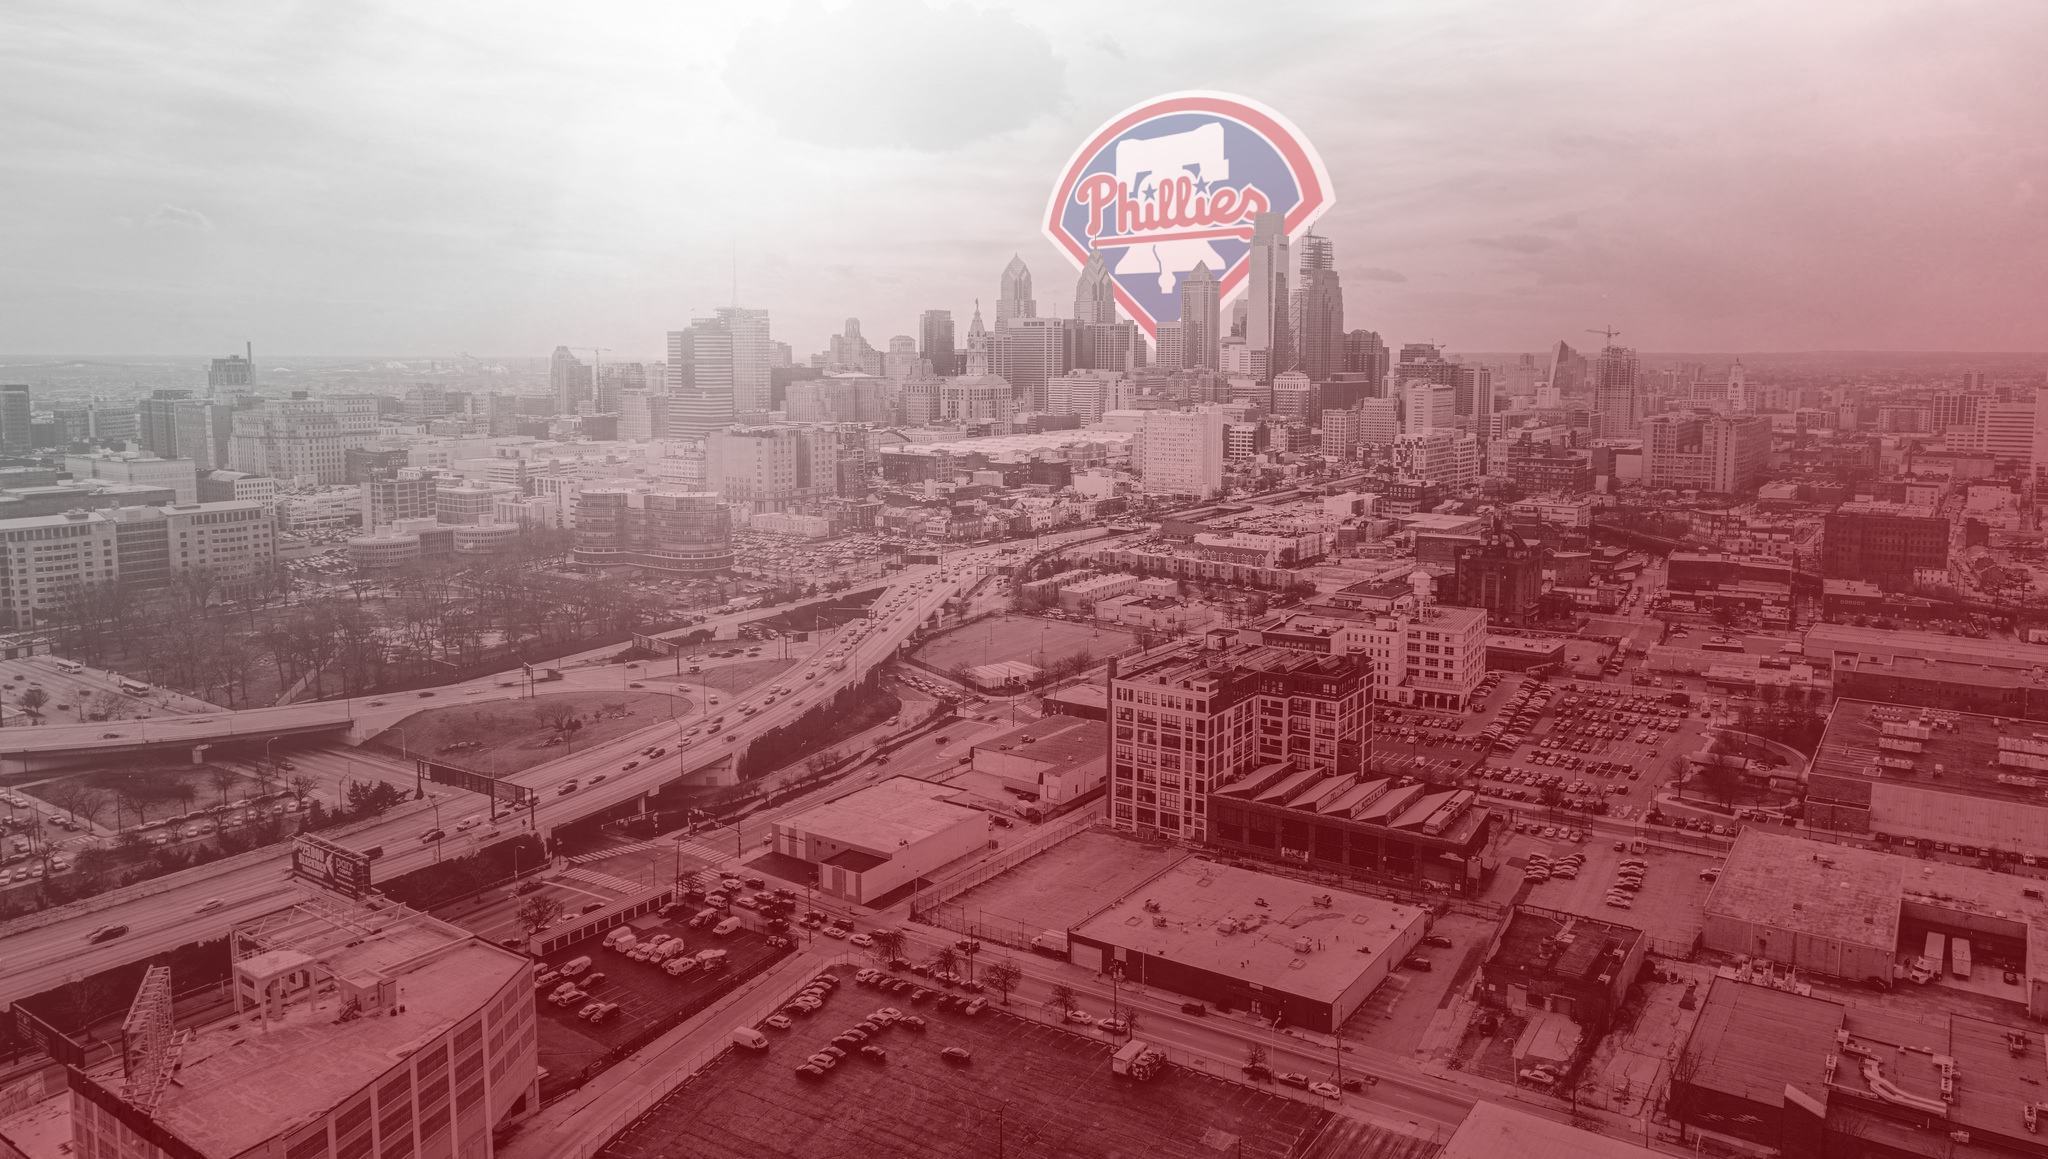 Phillies background I made with Philadelphia skyline